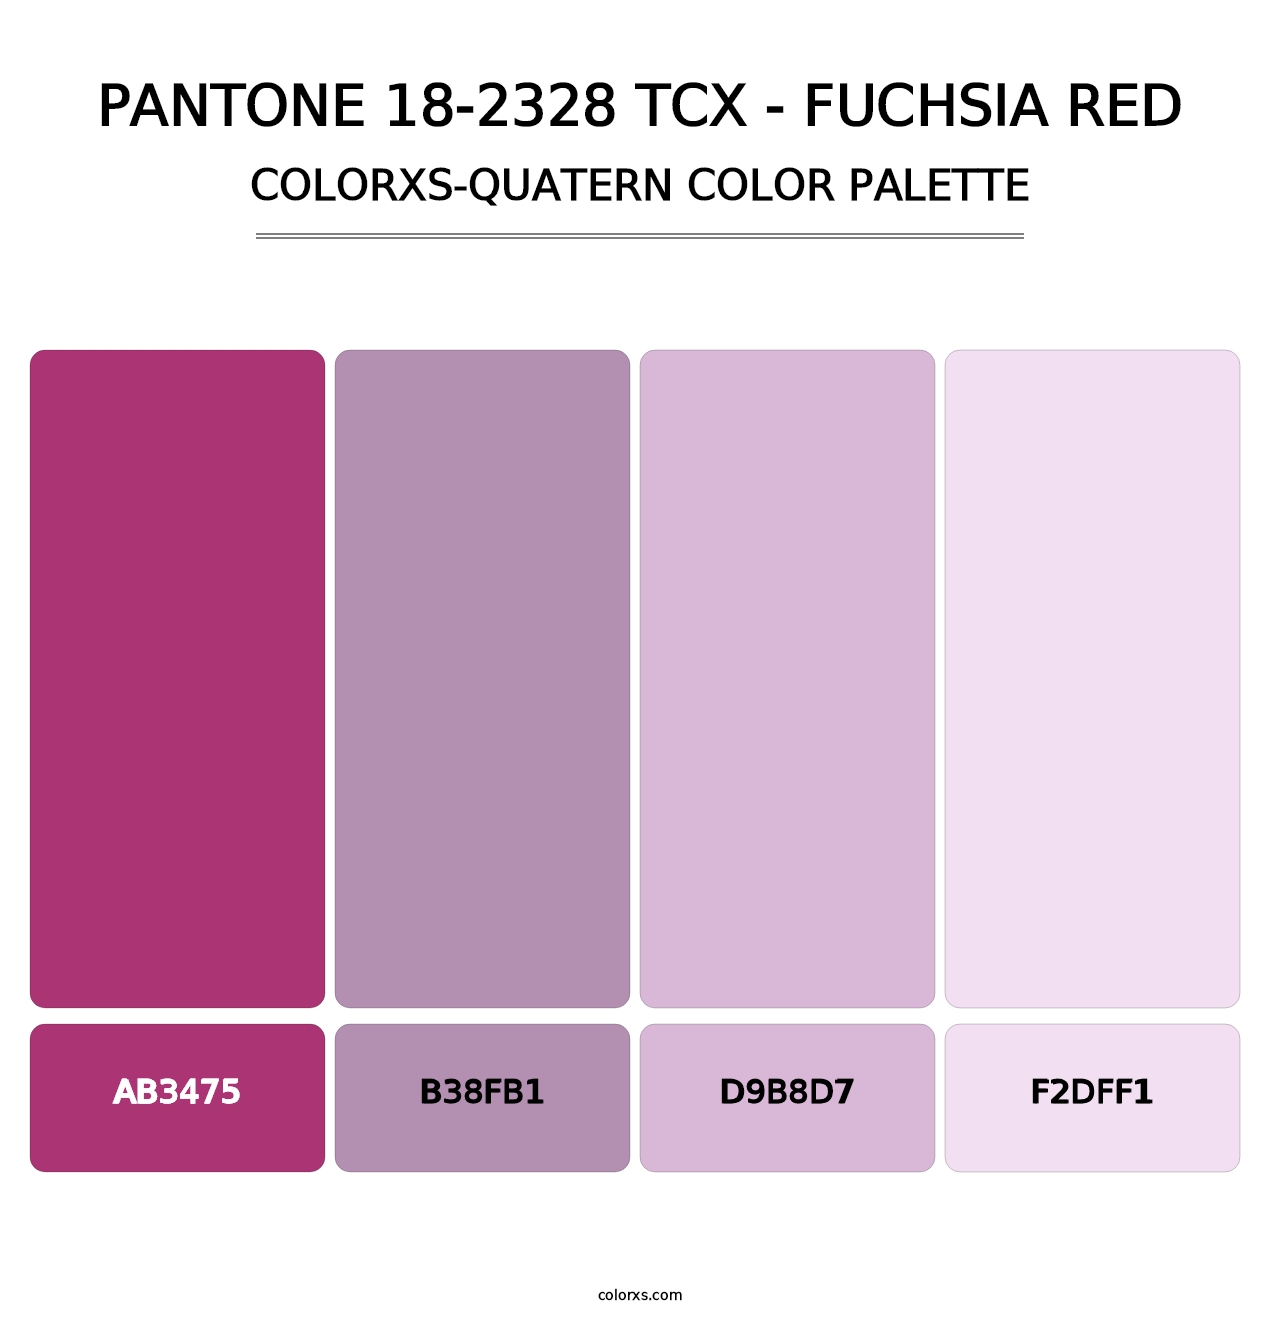 PANTONE 18-2328 TCX - Fuchsia Red - Colorxs Quatern Palette